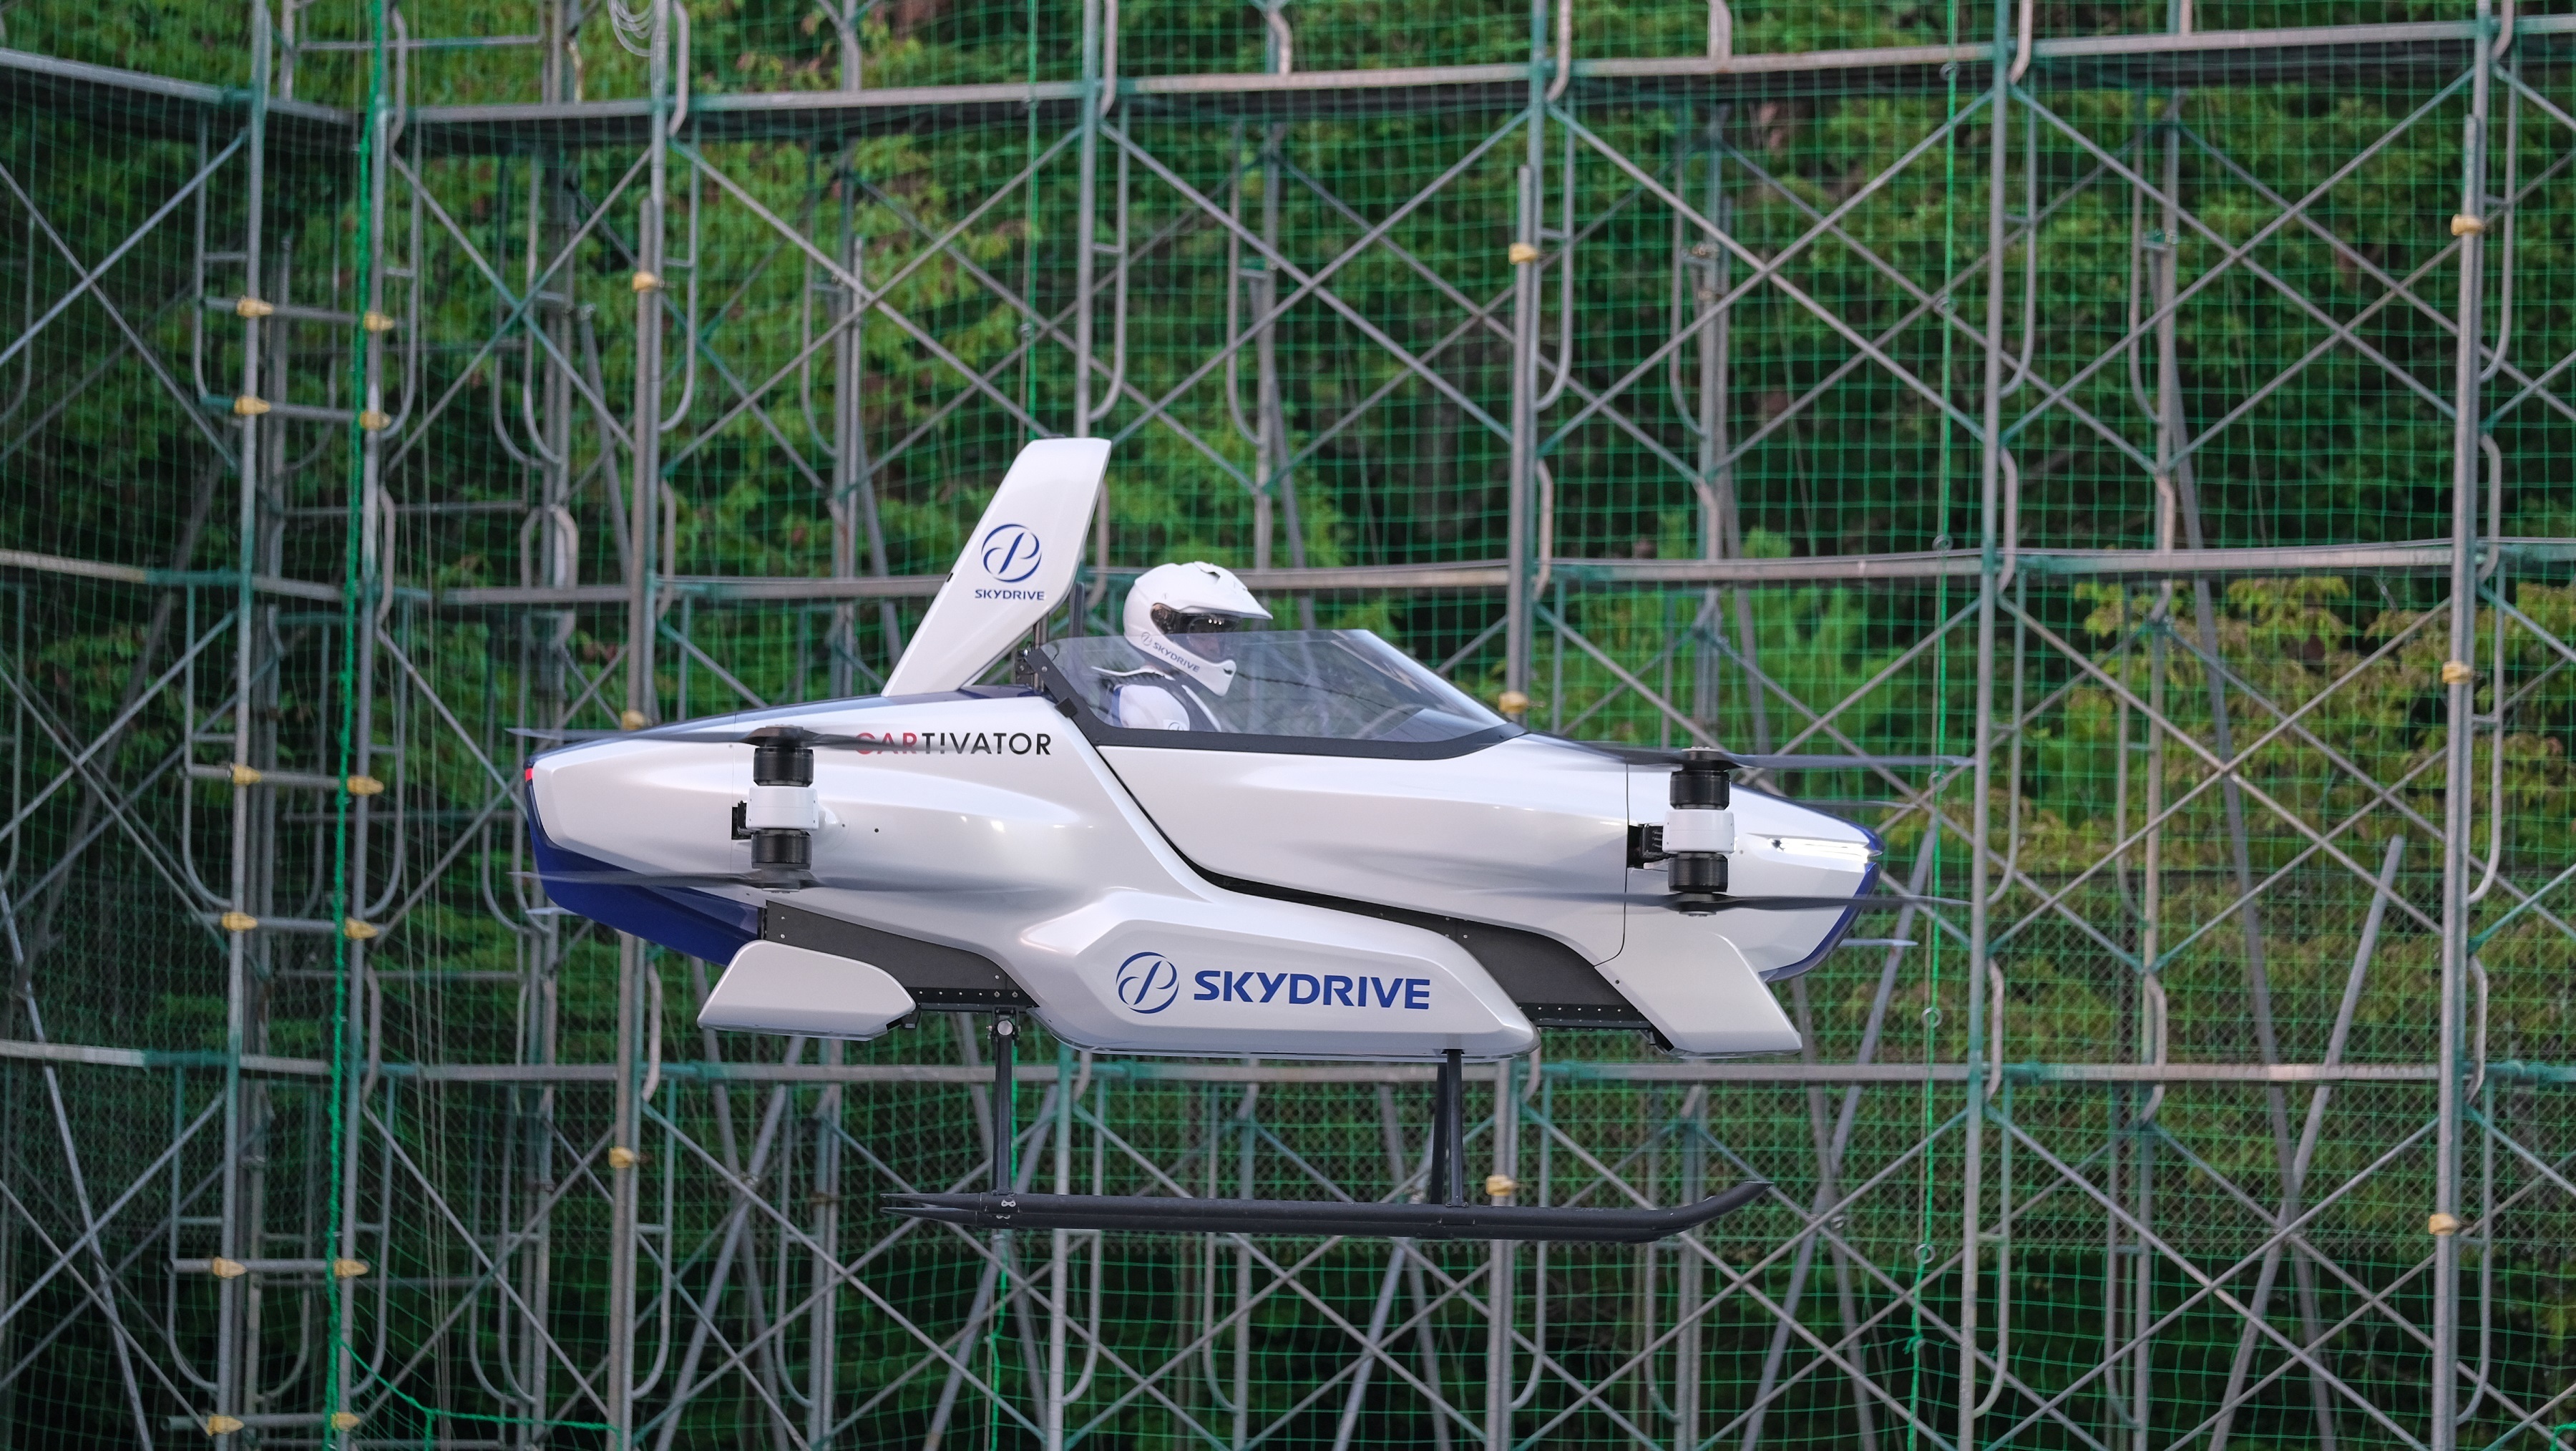 SkyDriveとの資本業務提携について　
～安心・安全な「空飛ぶクルマ」の社会実装に向けて～ – Net24